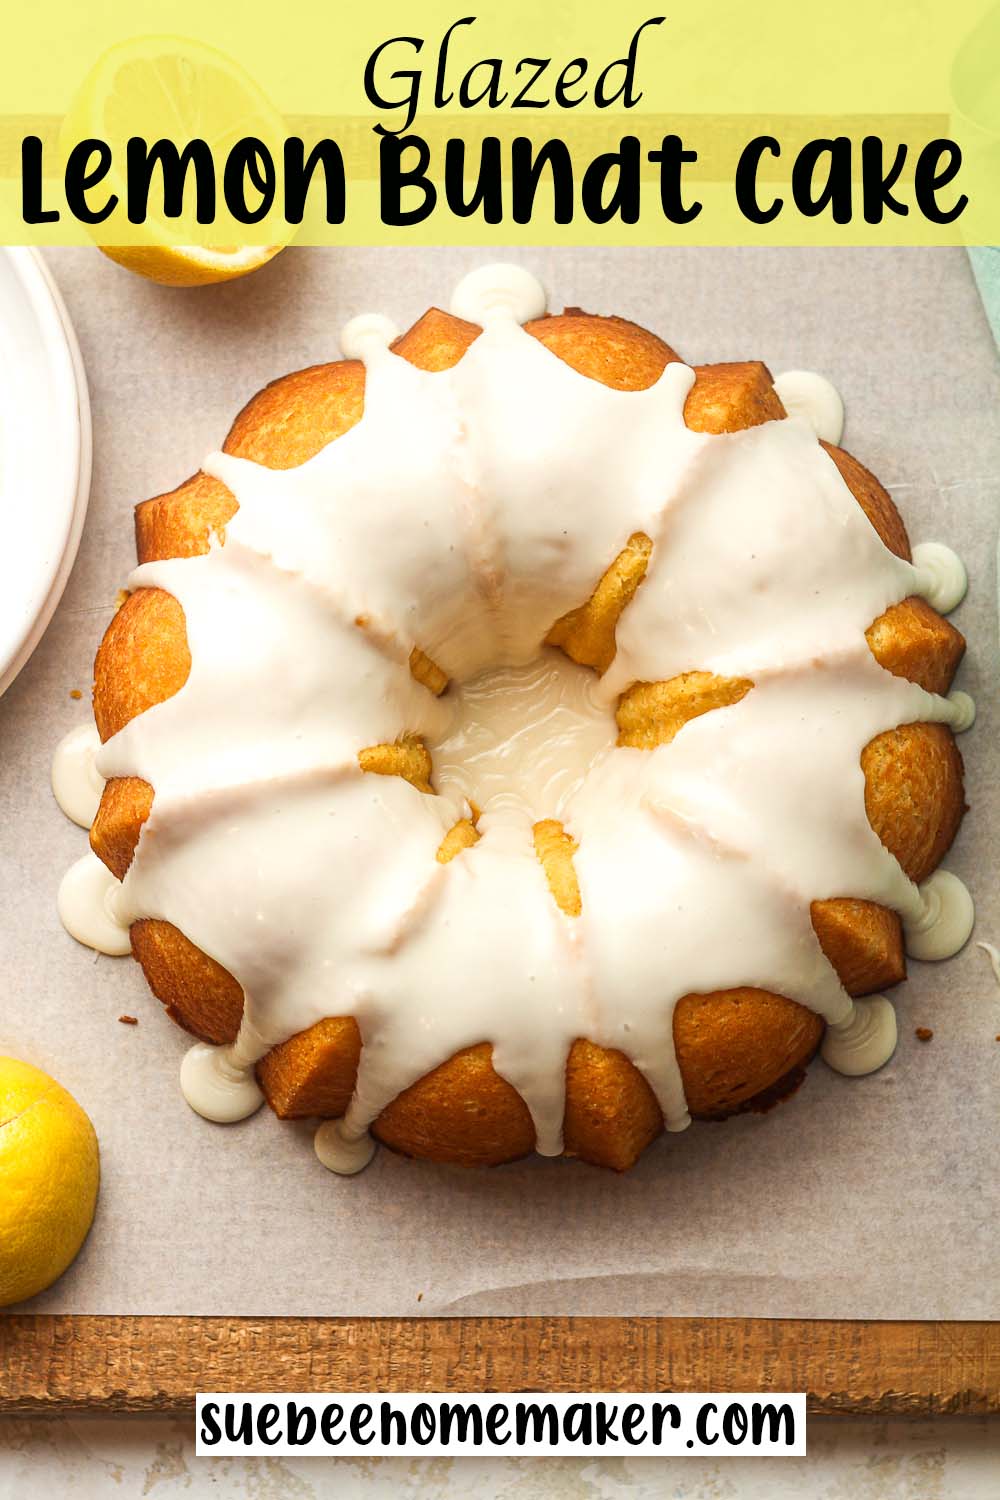 Overhead view of a glazed lemon bundt cake.